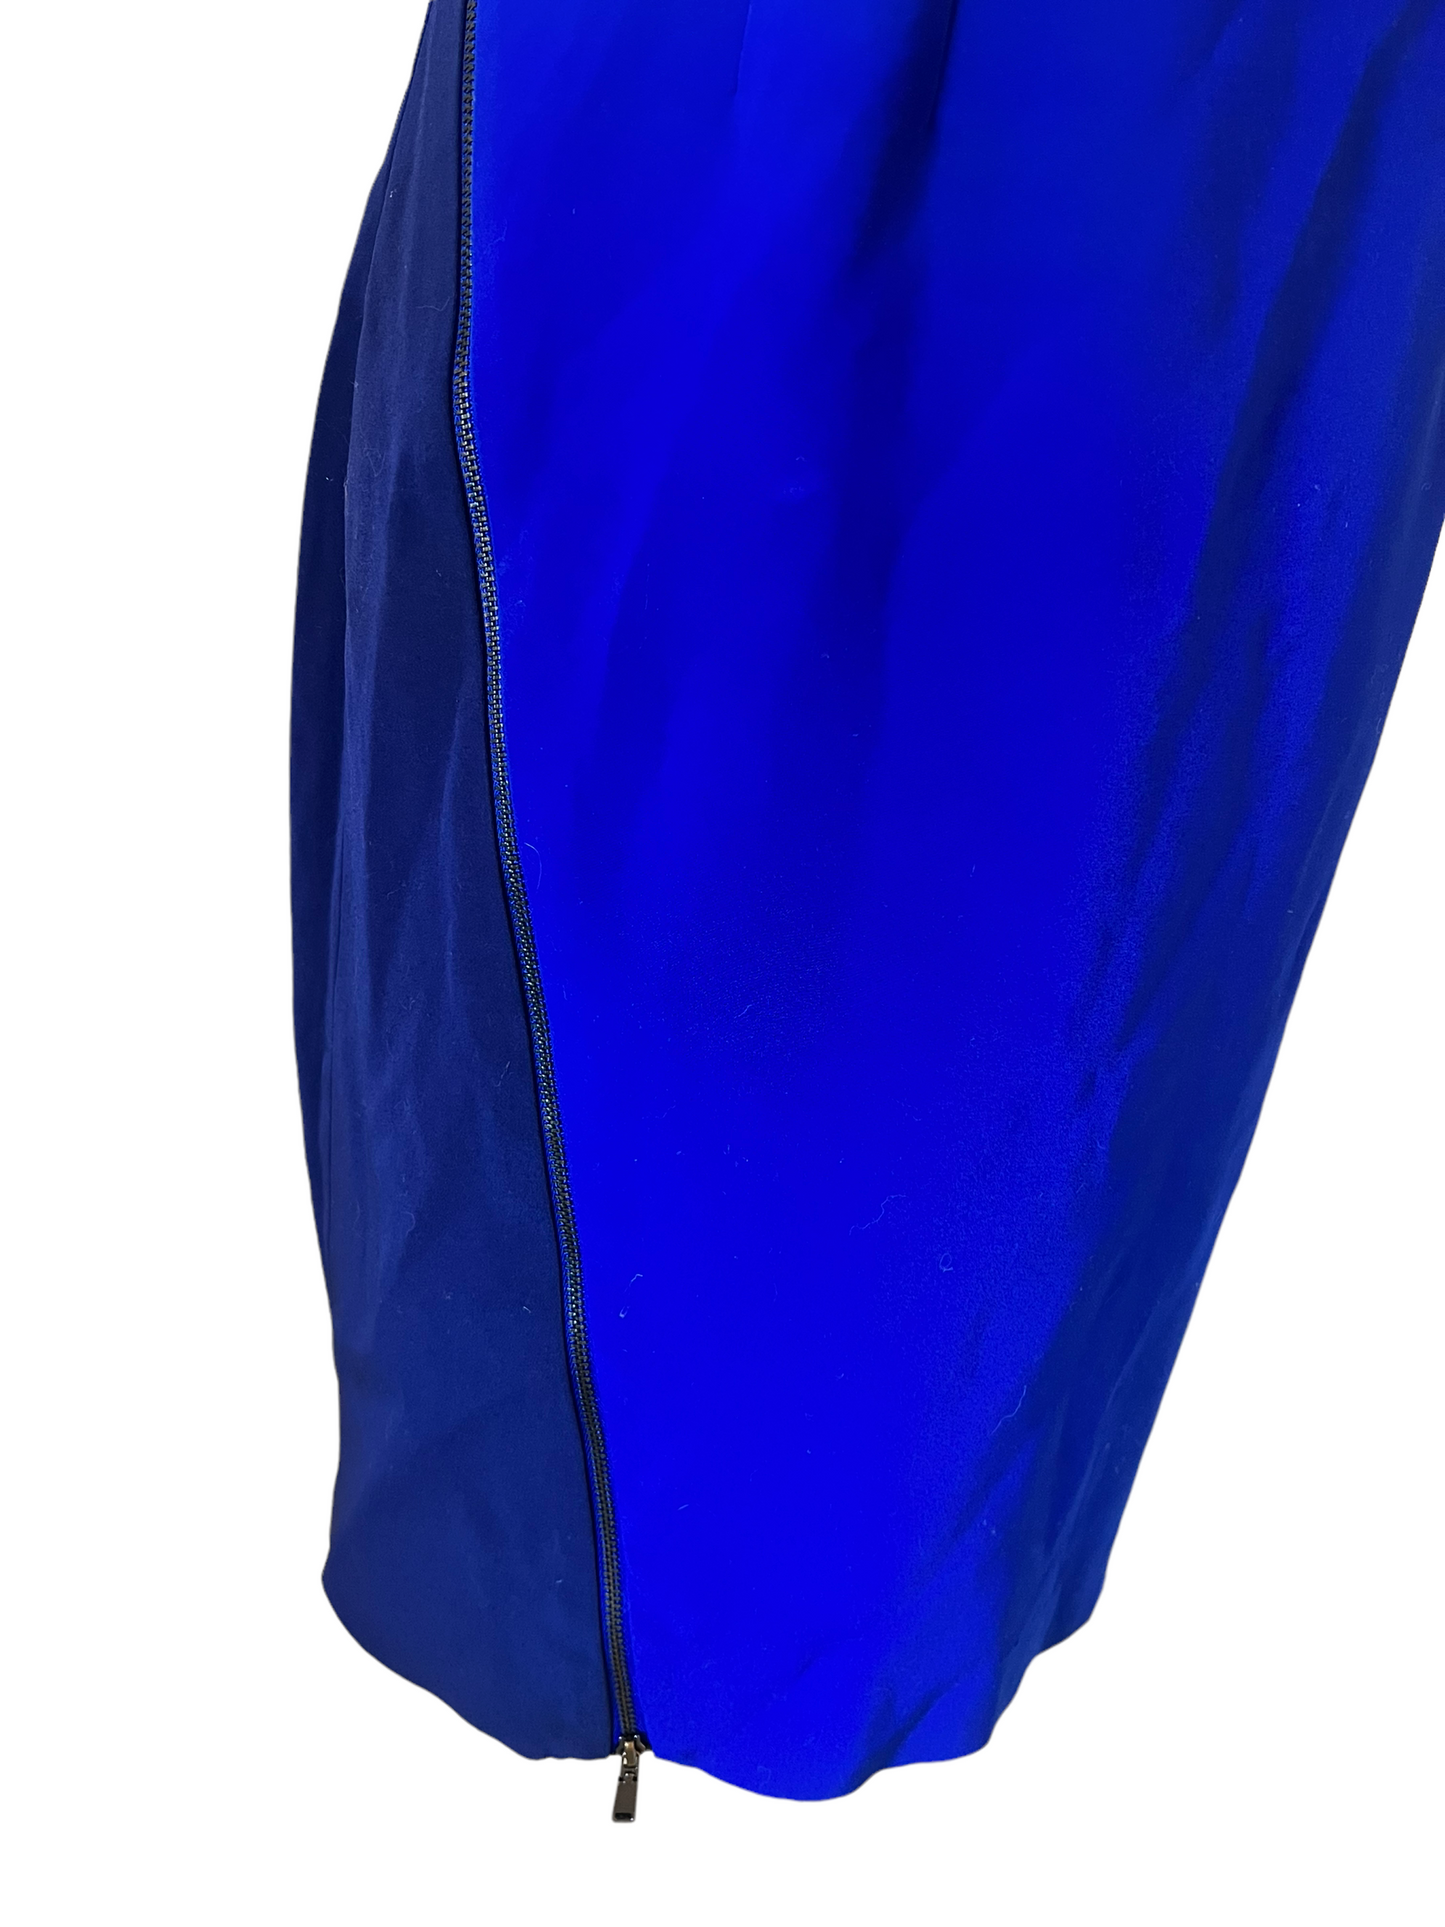 Elie Tahari Navy & Blue Color Block Size 8 Dress